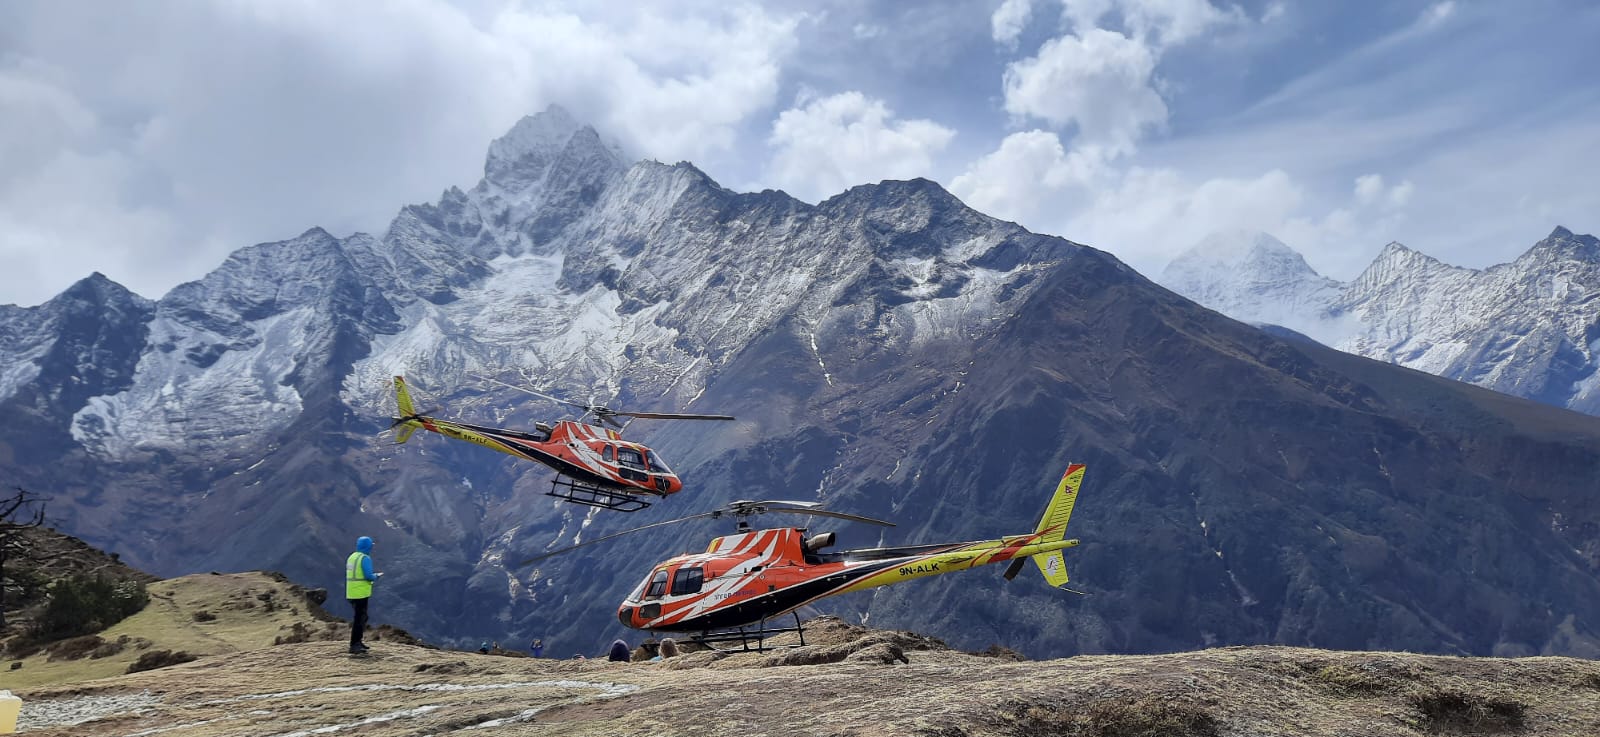 Helicopter to Lukla From Gorkshep, 7 days Everest base camp trek